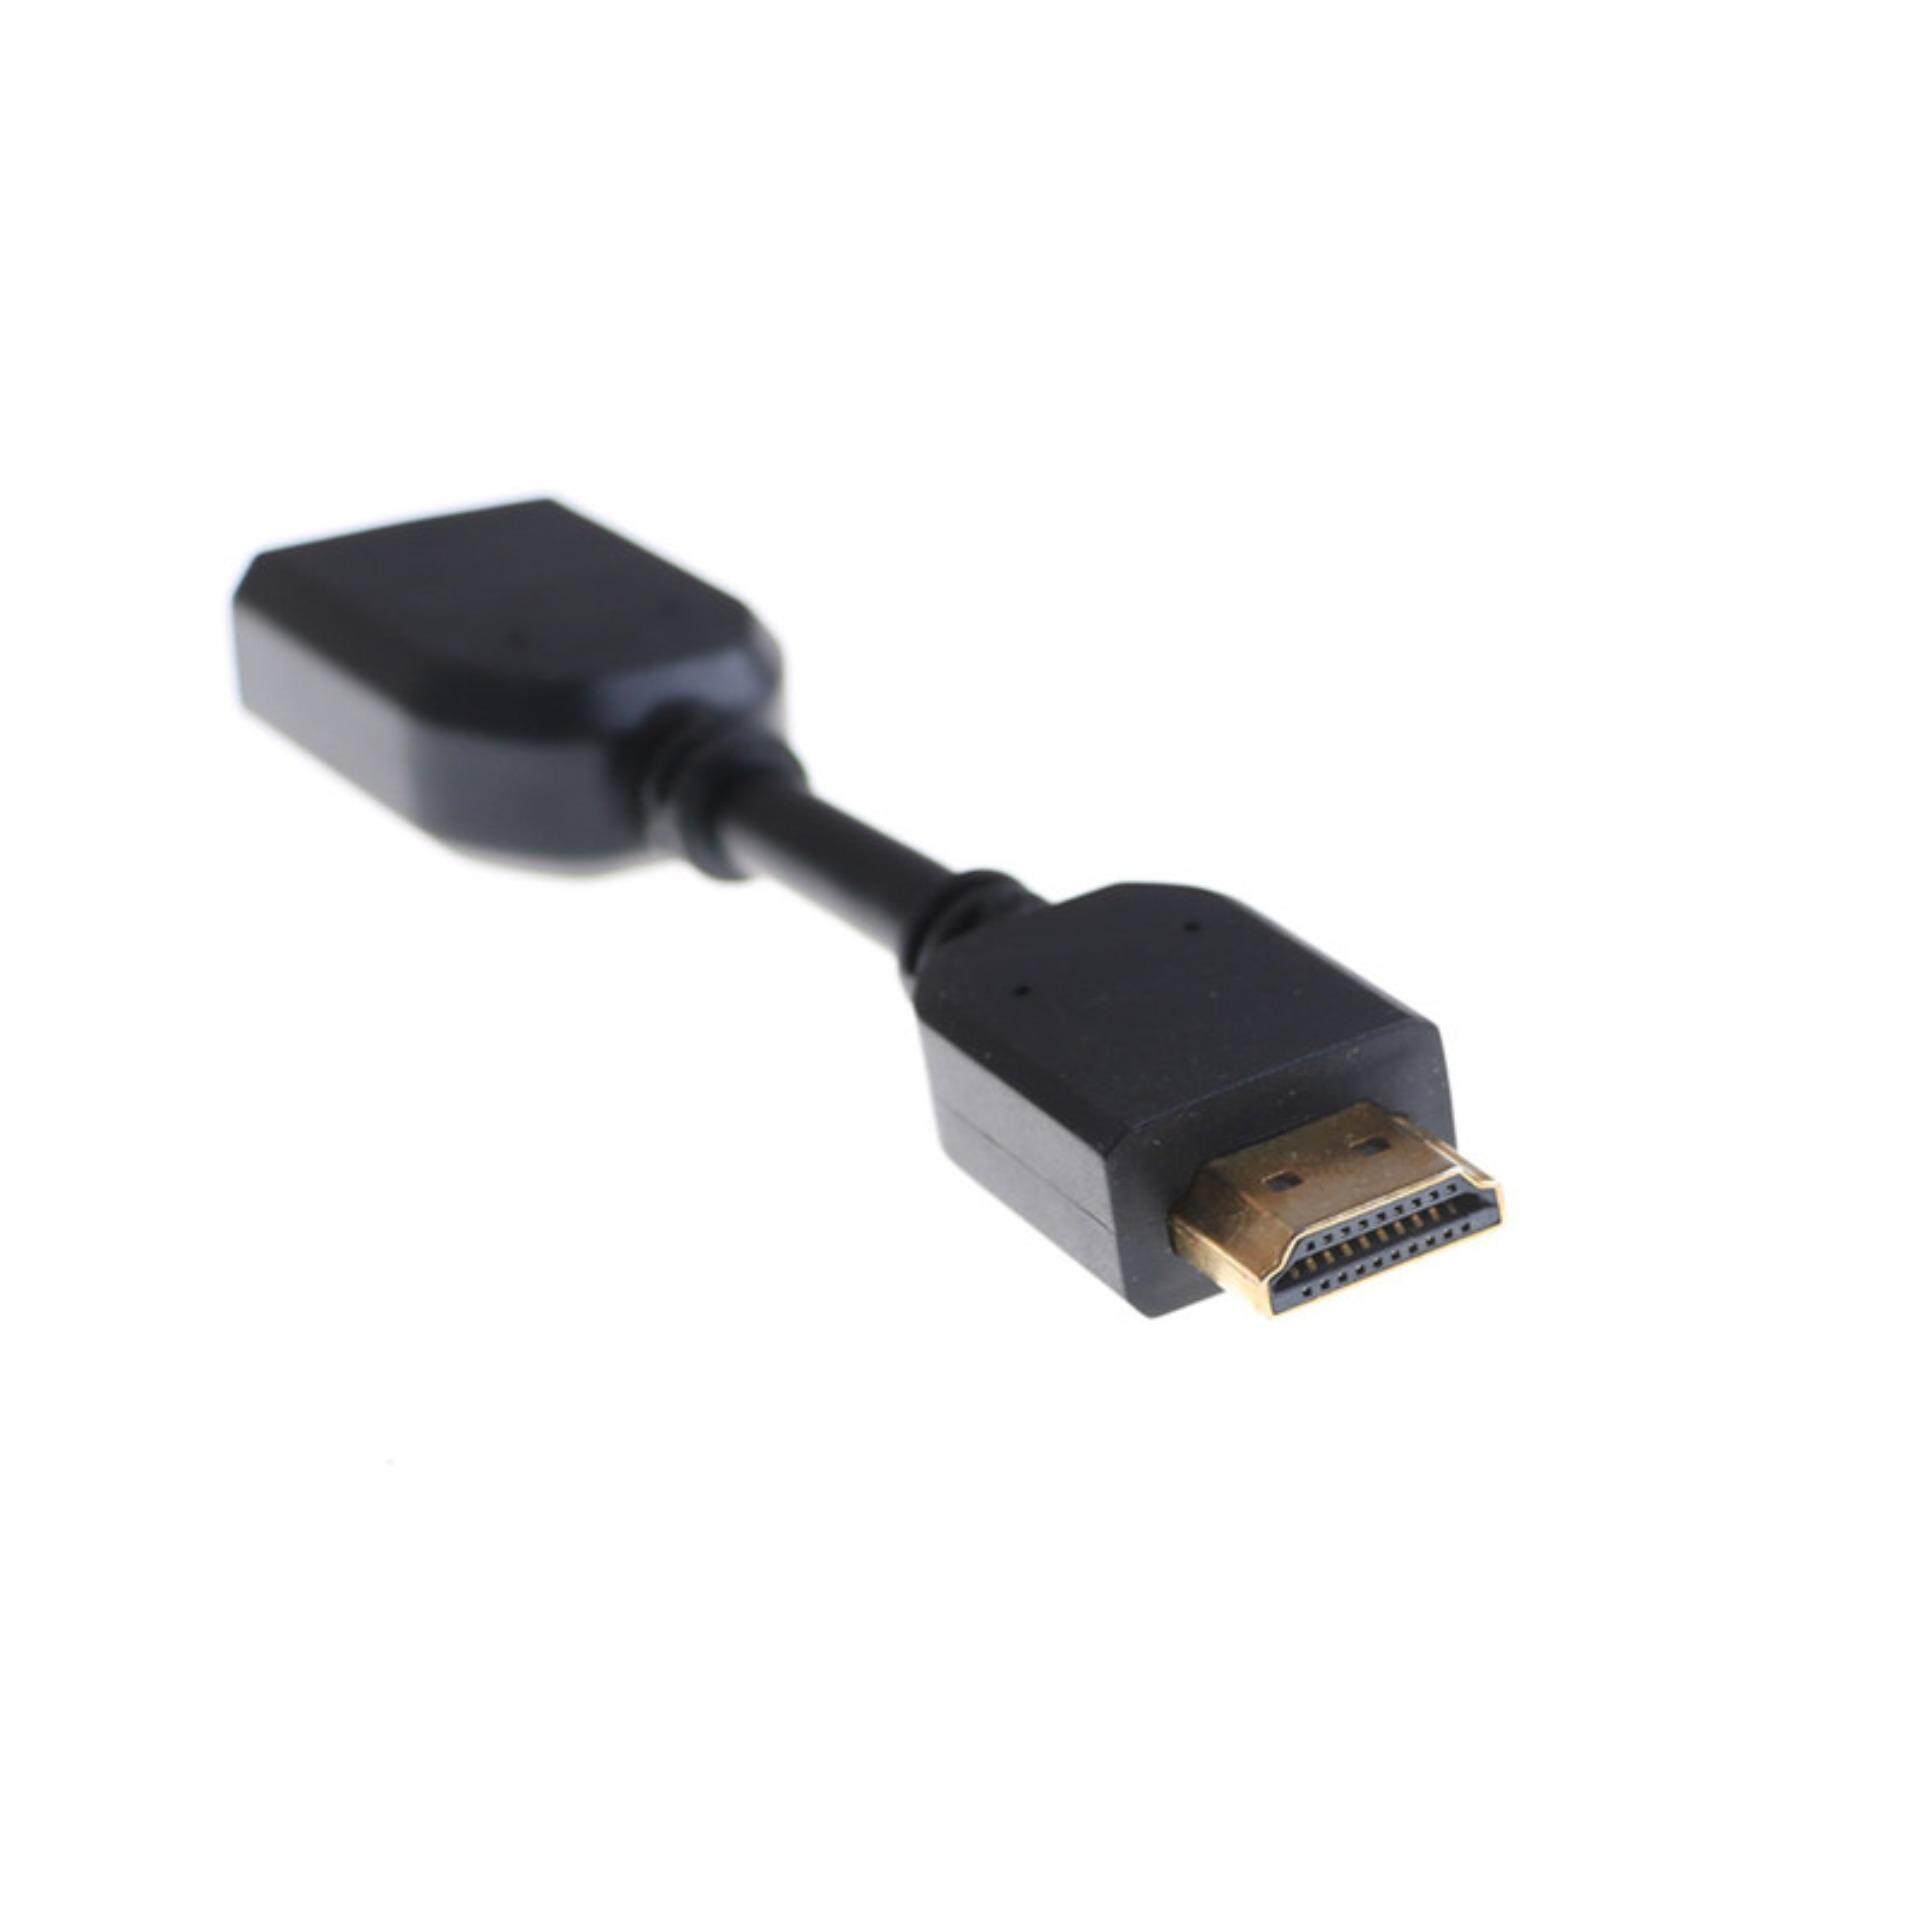 Mecola Sudut Apapun Dapat Disesuaikan Rotasi HDMI Laki-laki Ke Perempuan Putar Kabel Adaptor Converter